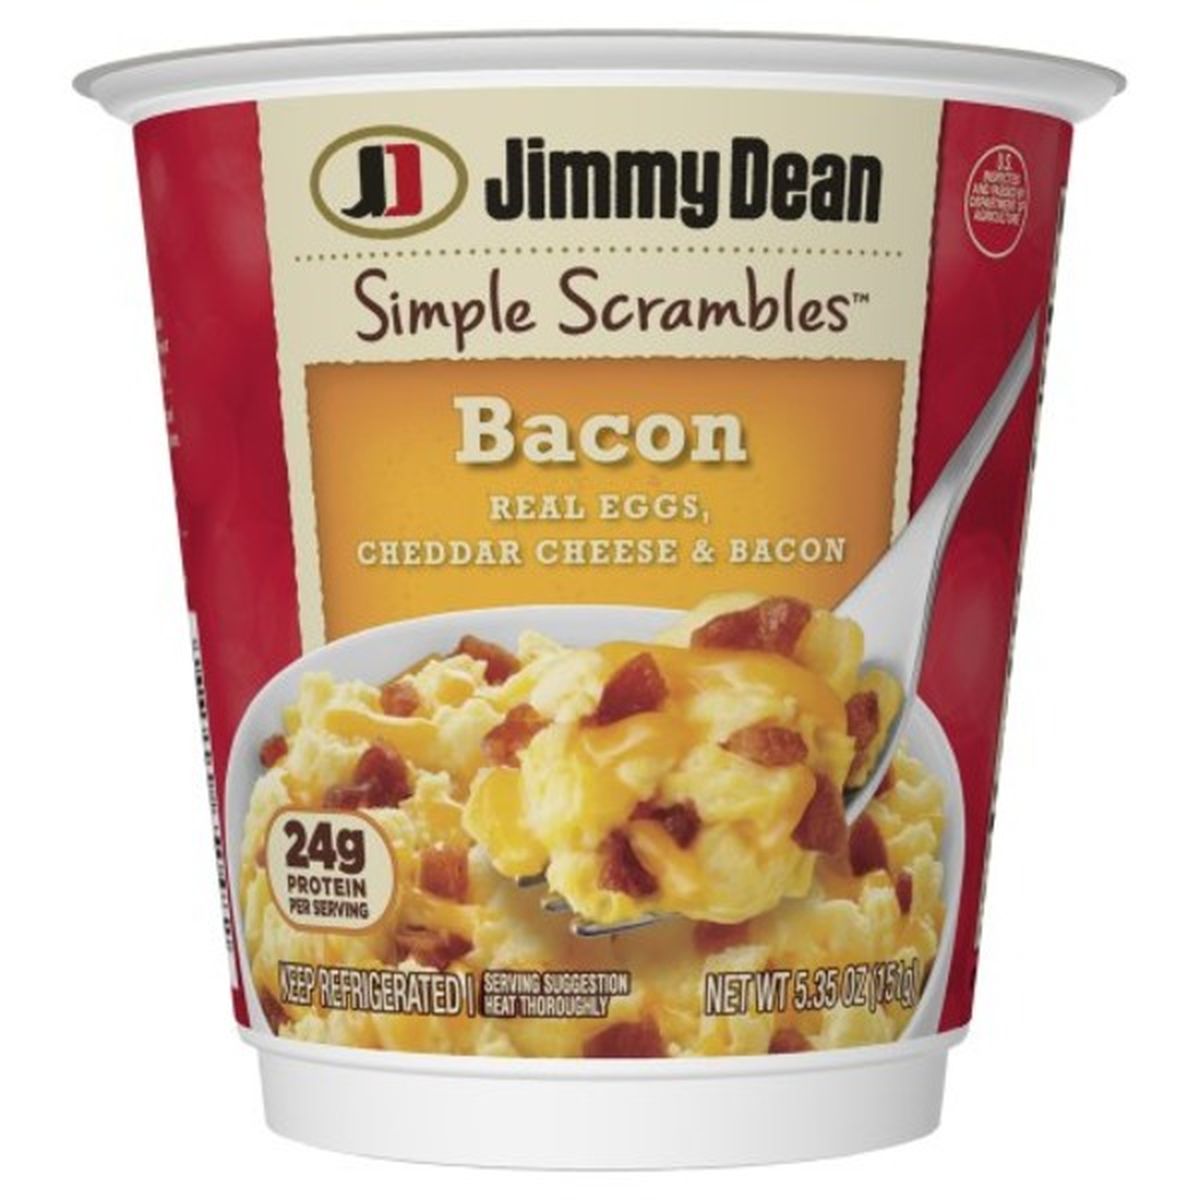 Calories in Jimmy Dean Bacon Simple Scrambles